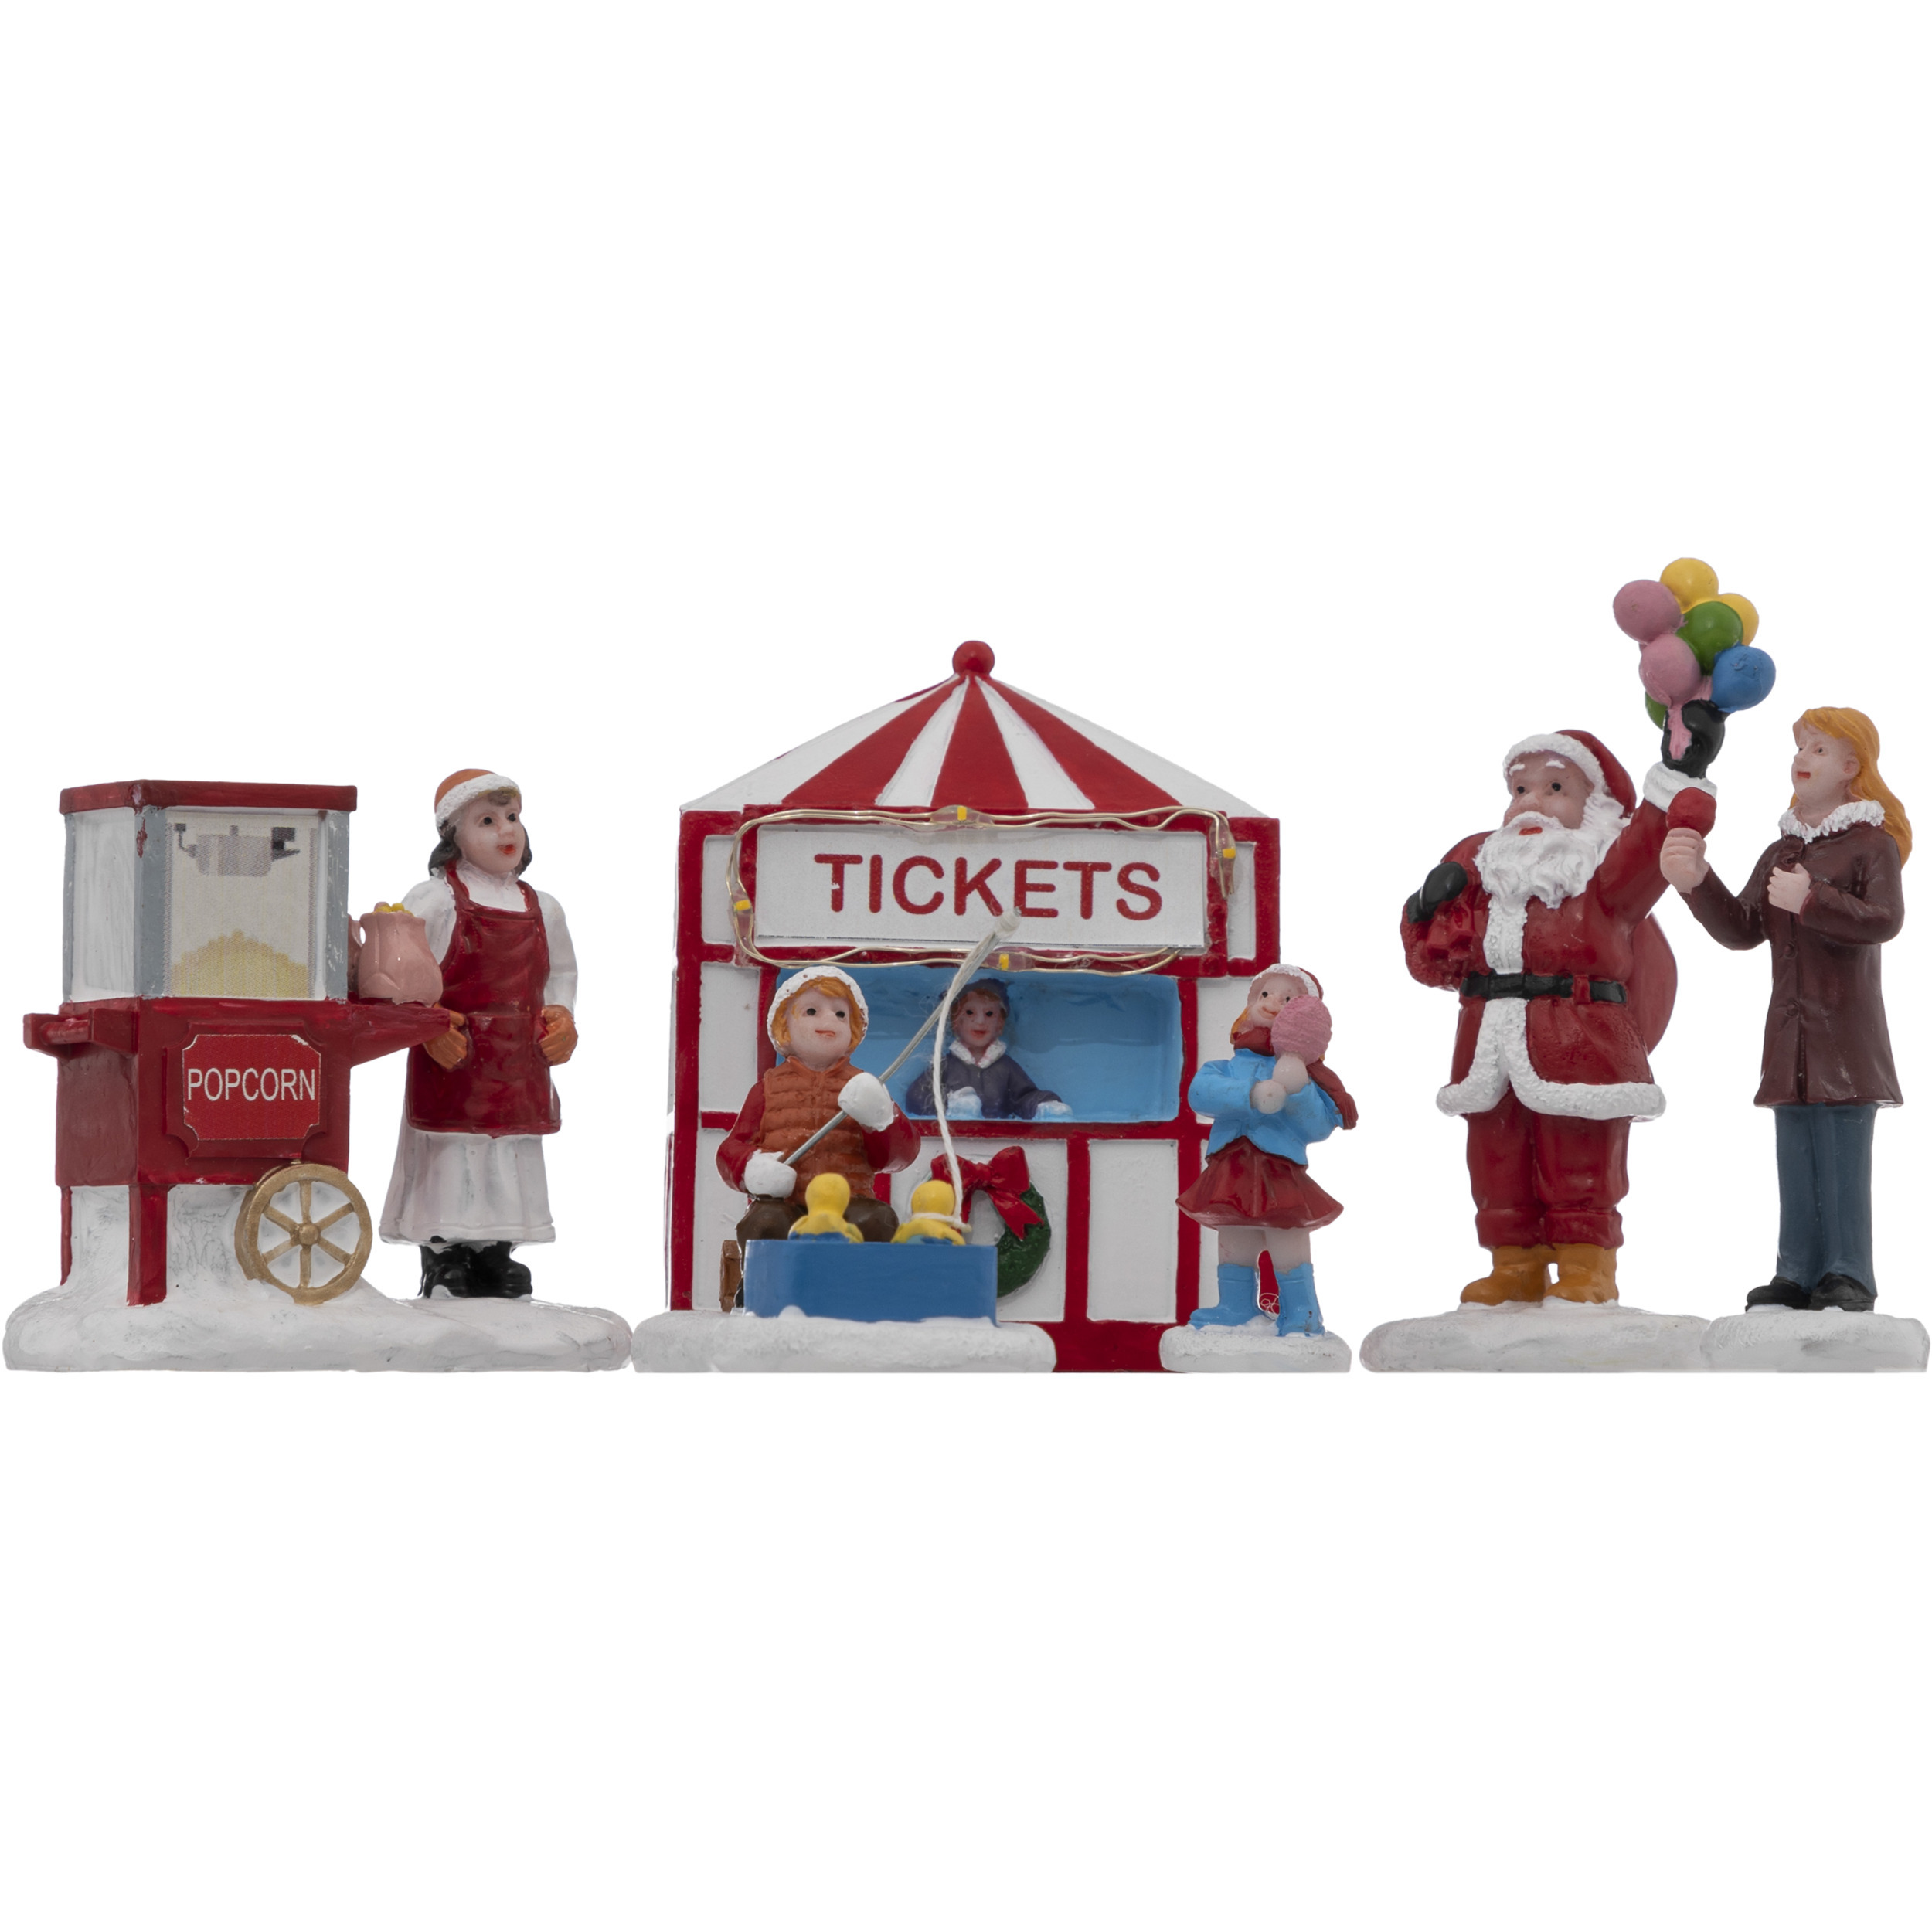 Kerstdorp accessoires miniatuur figuurtjes kermis